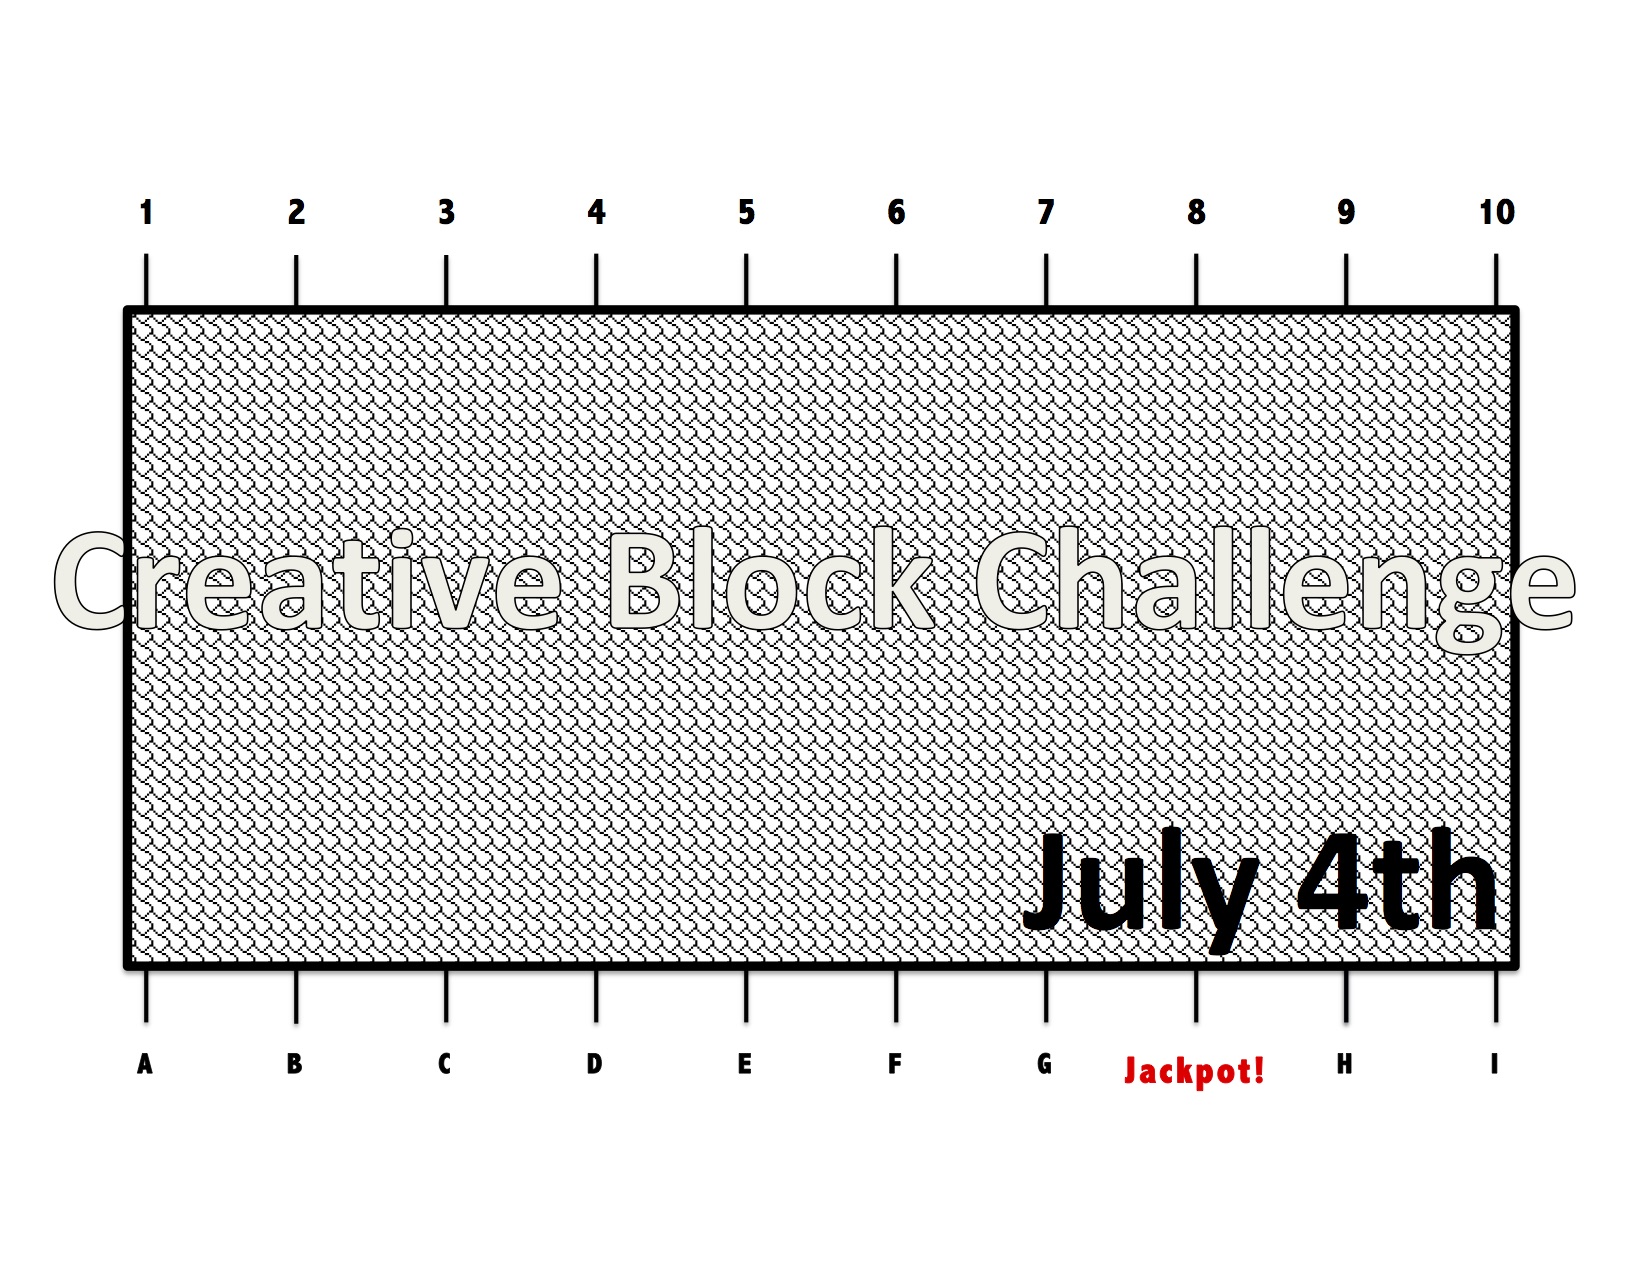 July 4 Creative Block Amidakuji.jpeg